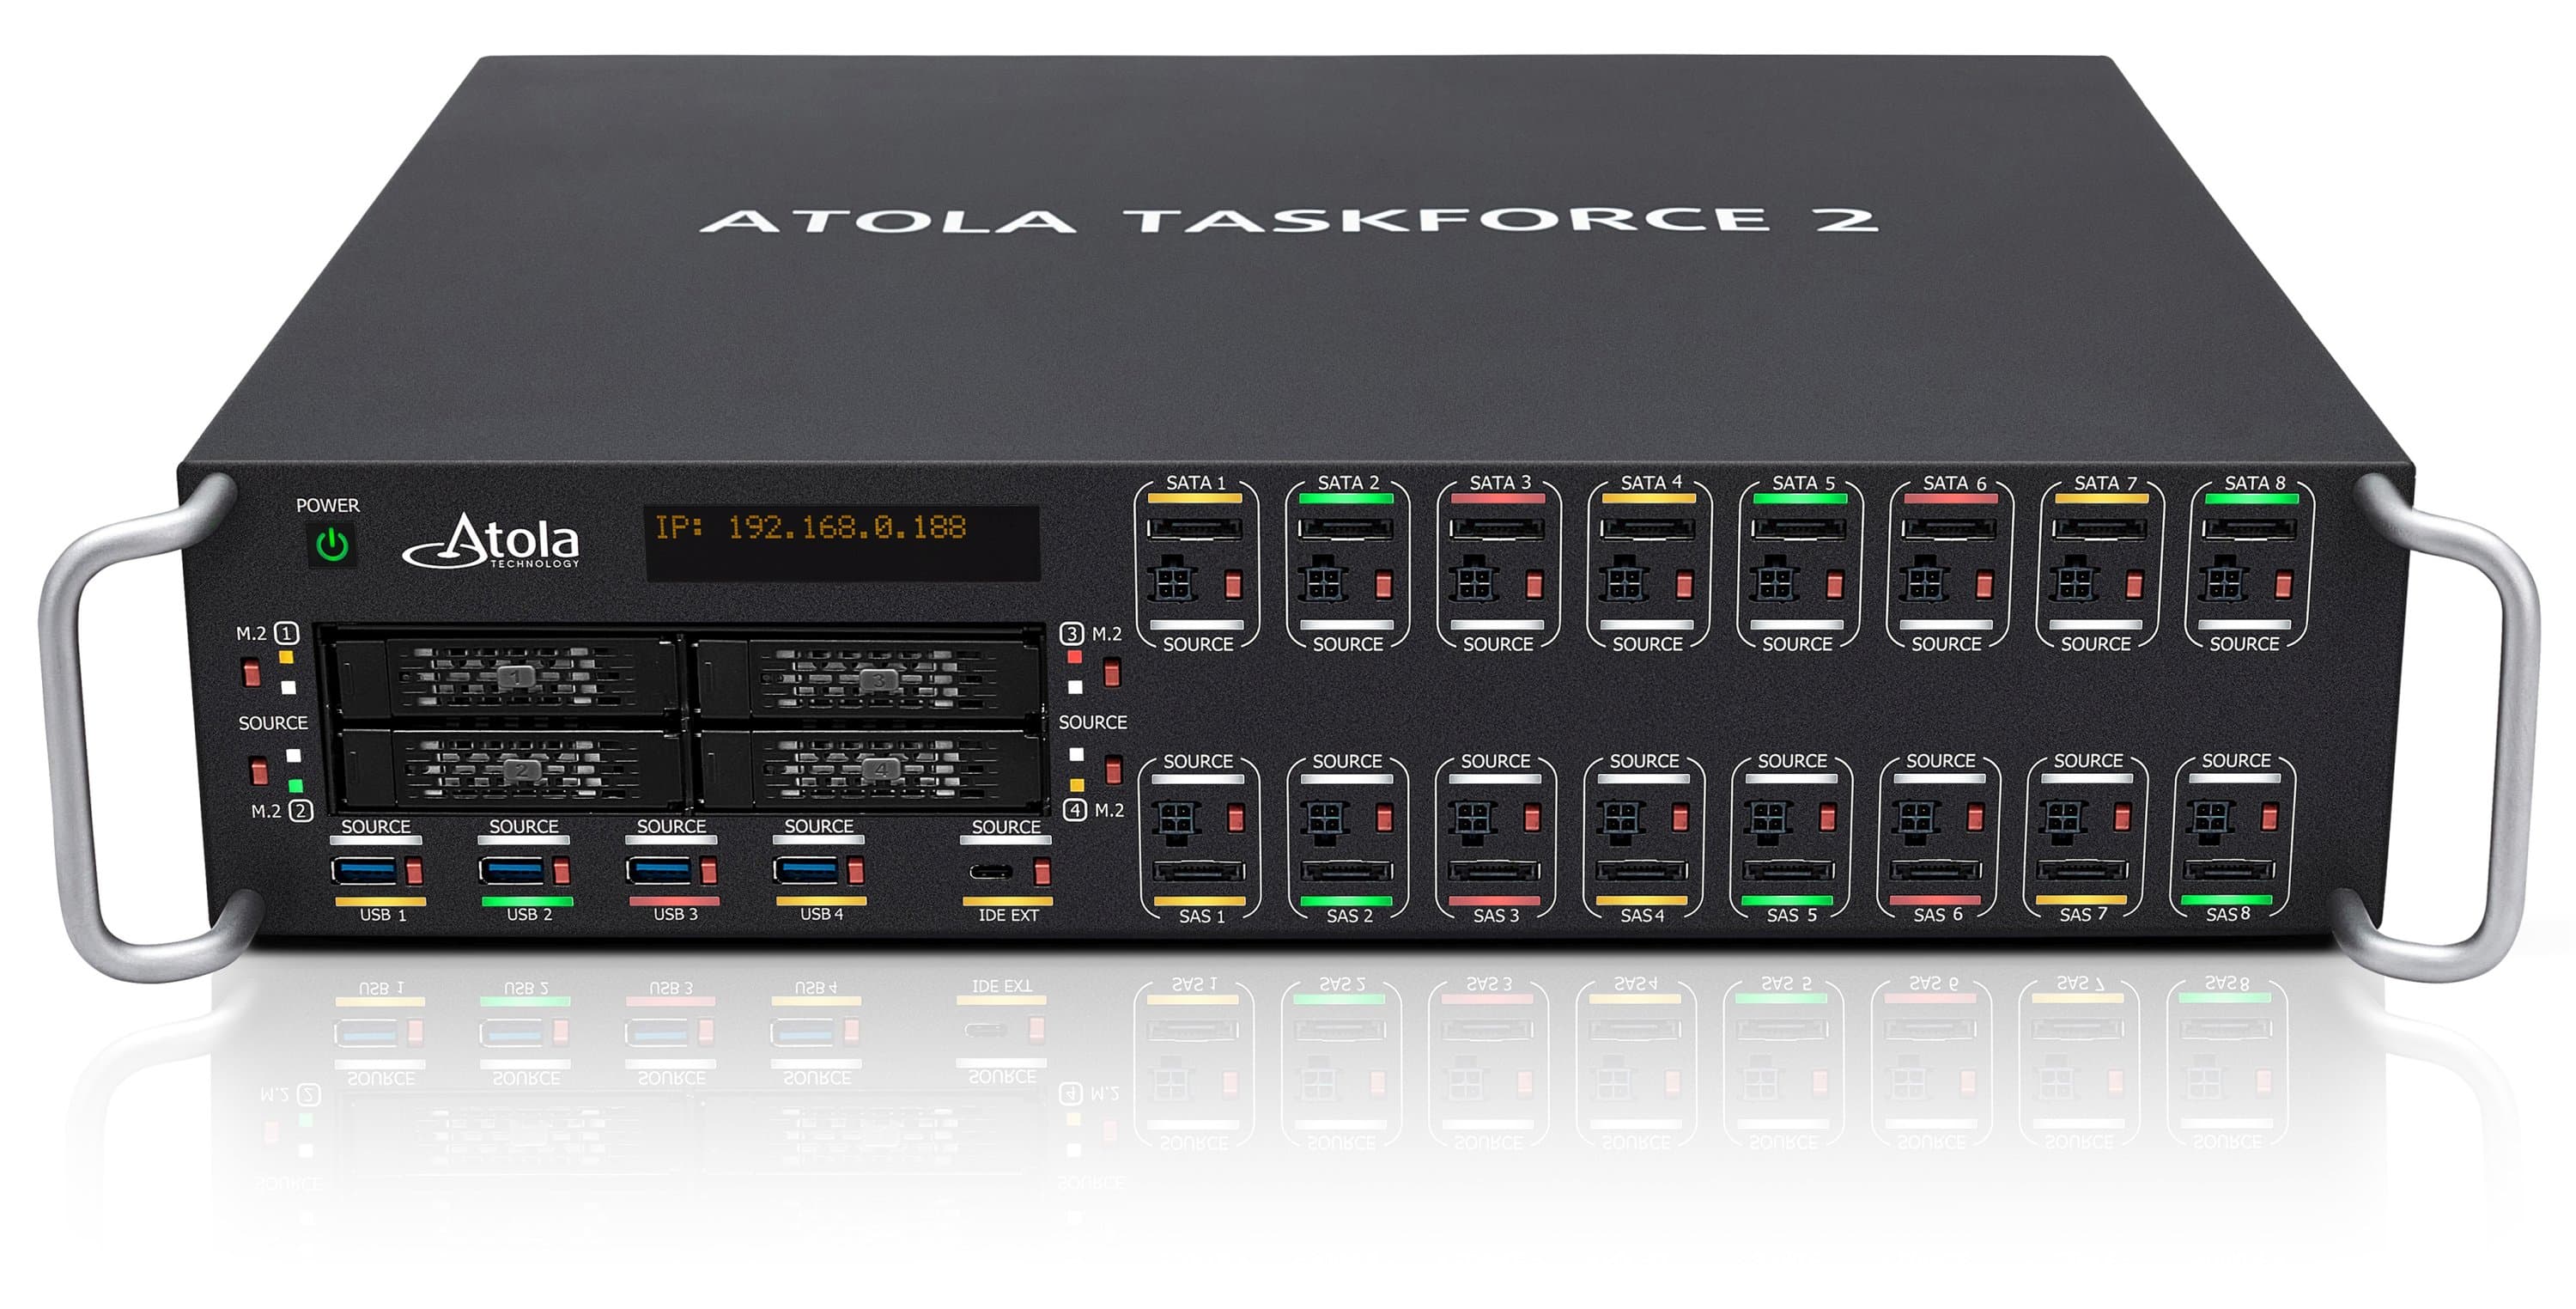 Atola TasfForce 2 with status LEDs